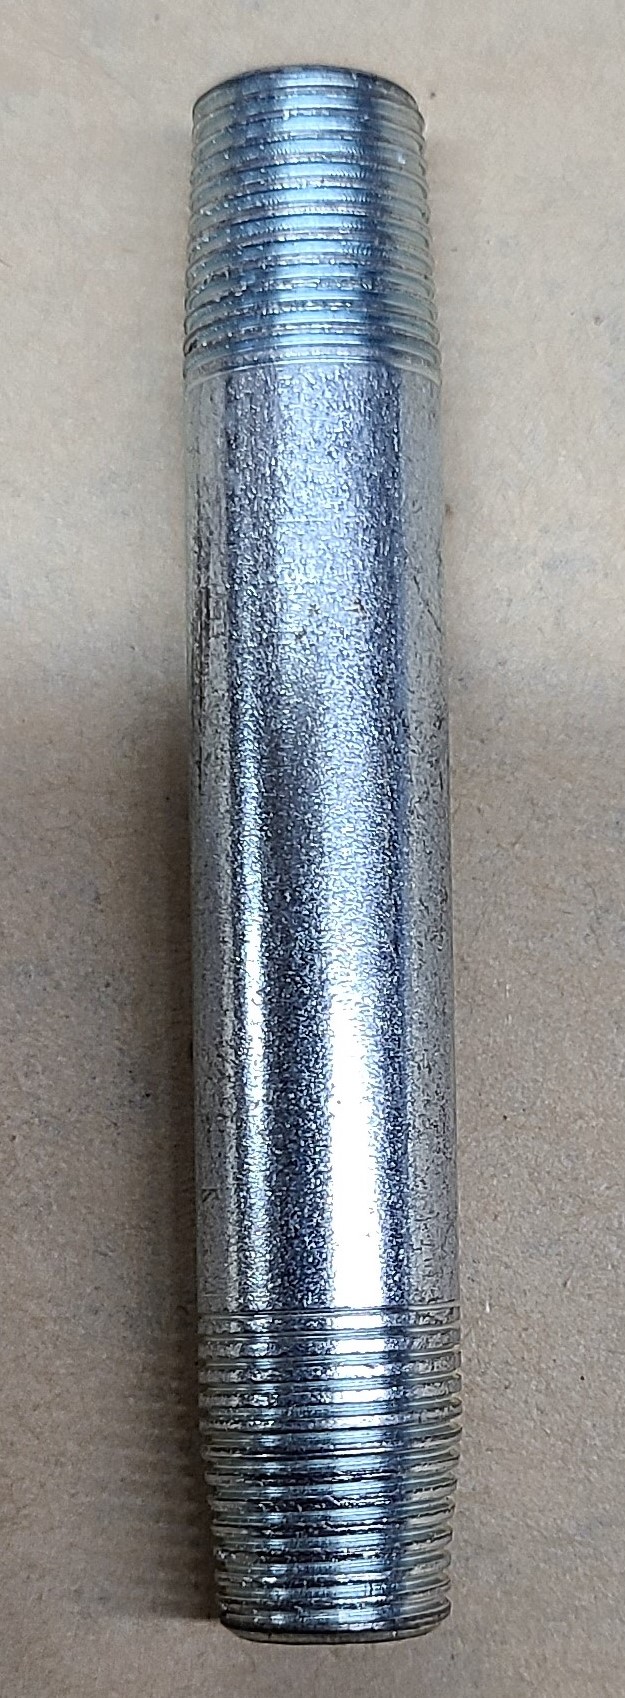 EL-MM-121 1/8" X 58 mm Extension Pipe (2 pack)